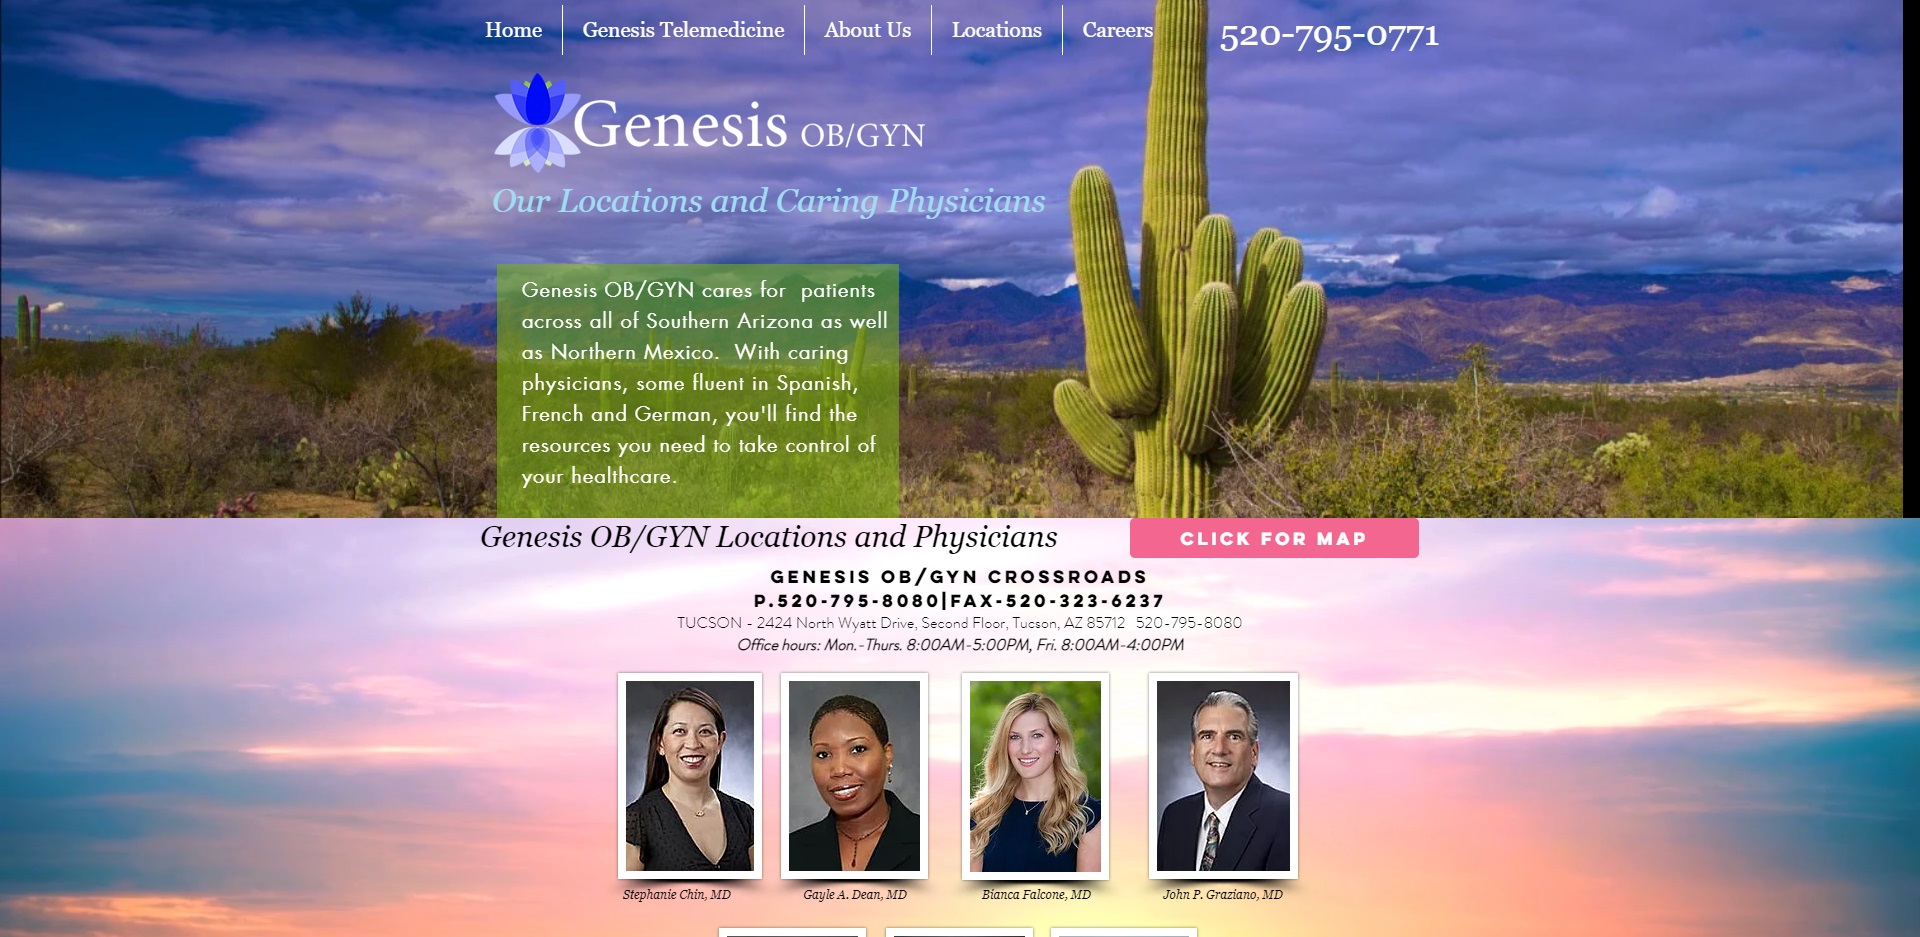 5 Best Gynecologists in Tucson, AZ